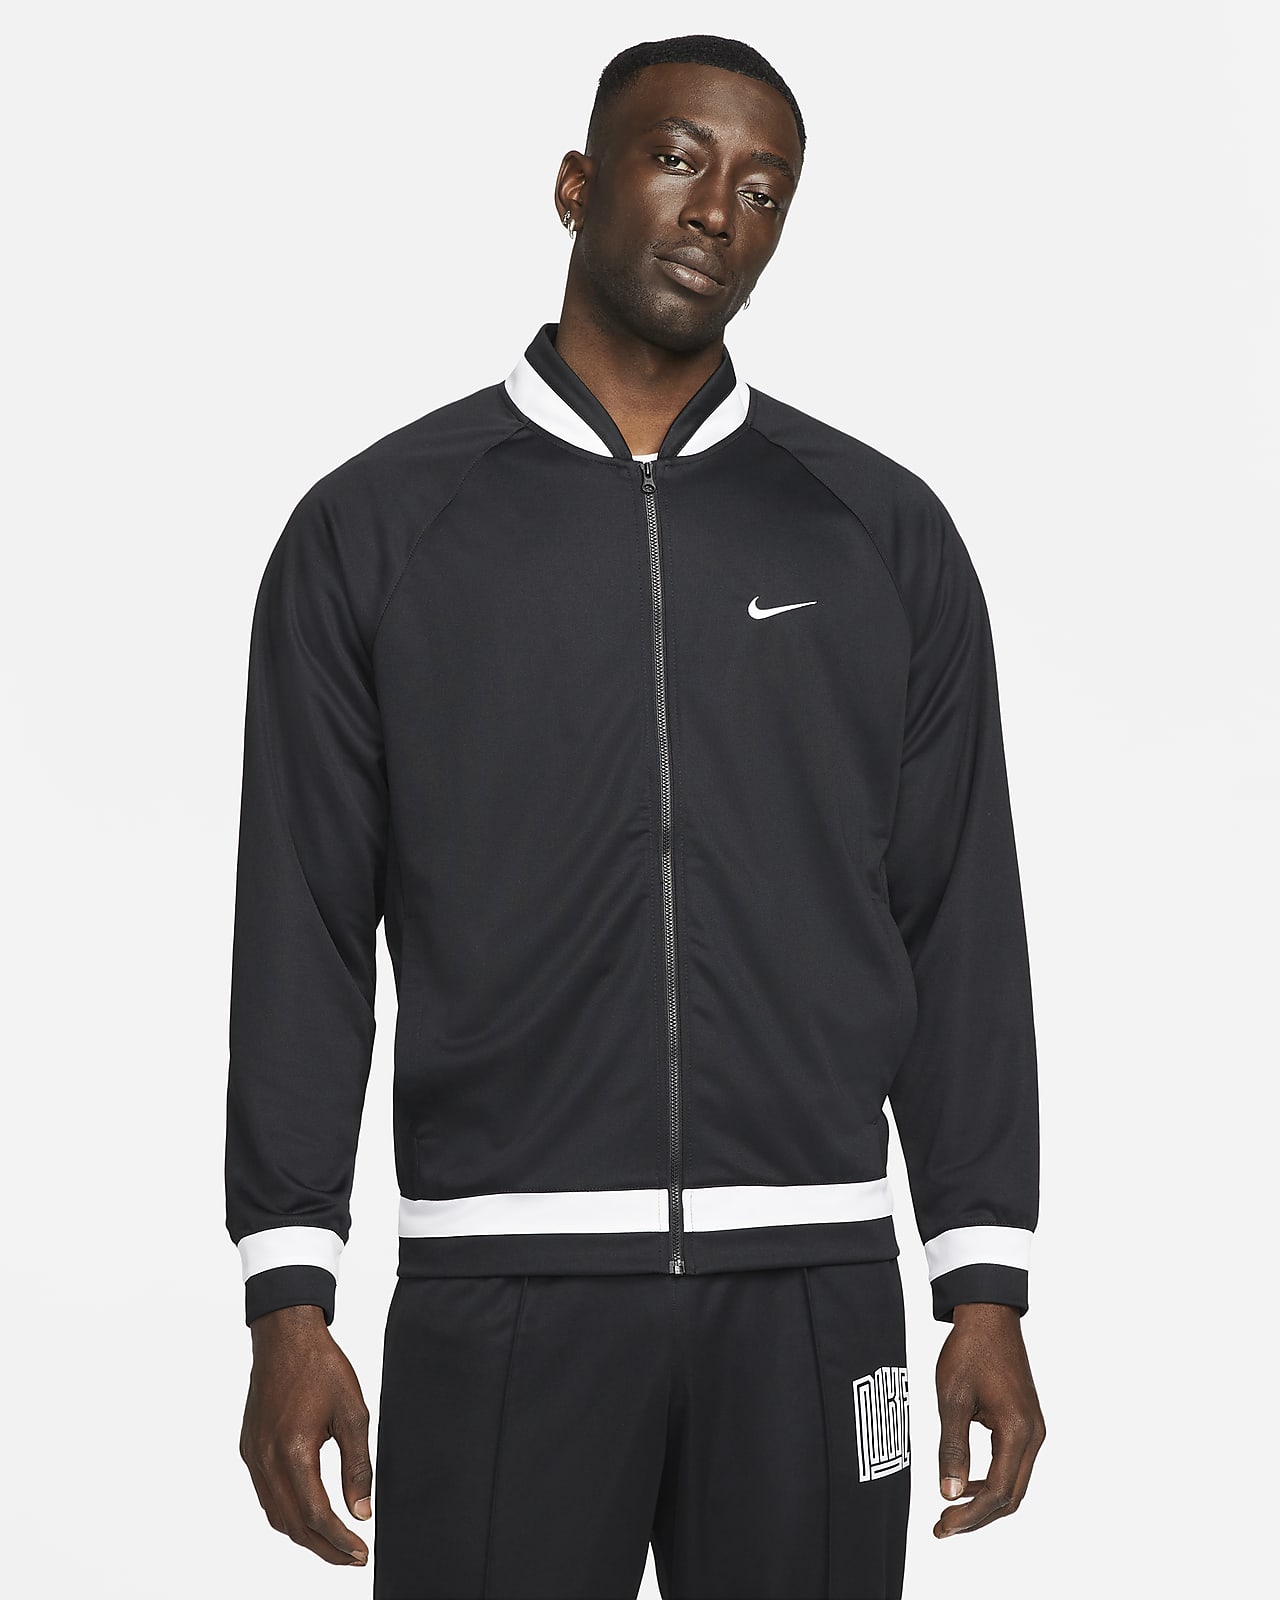 Nike Dri-FIT Men's Basketball Jacket